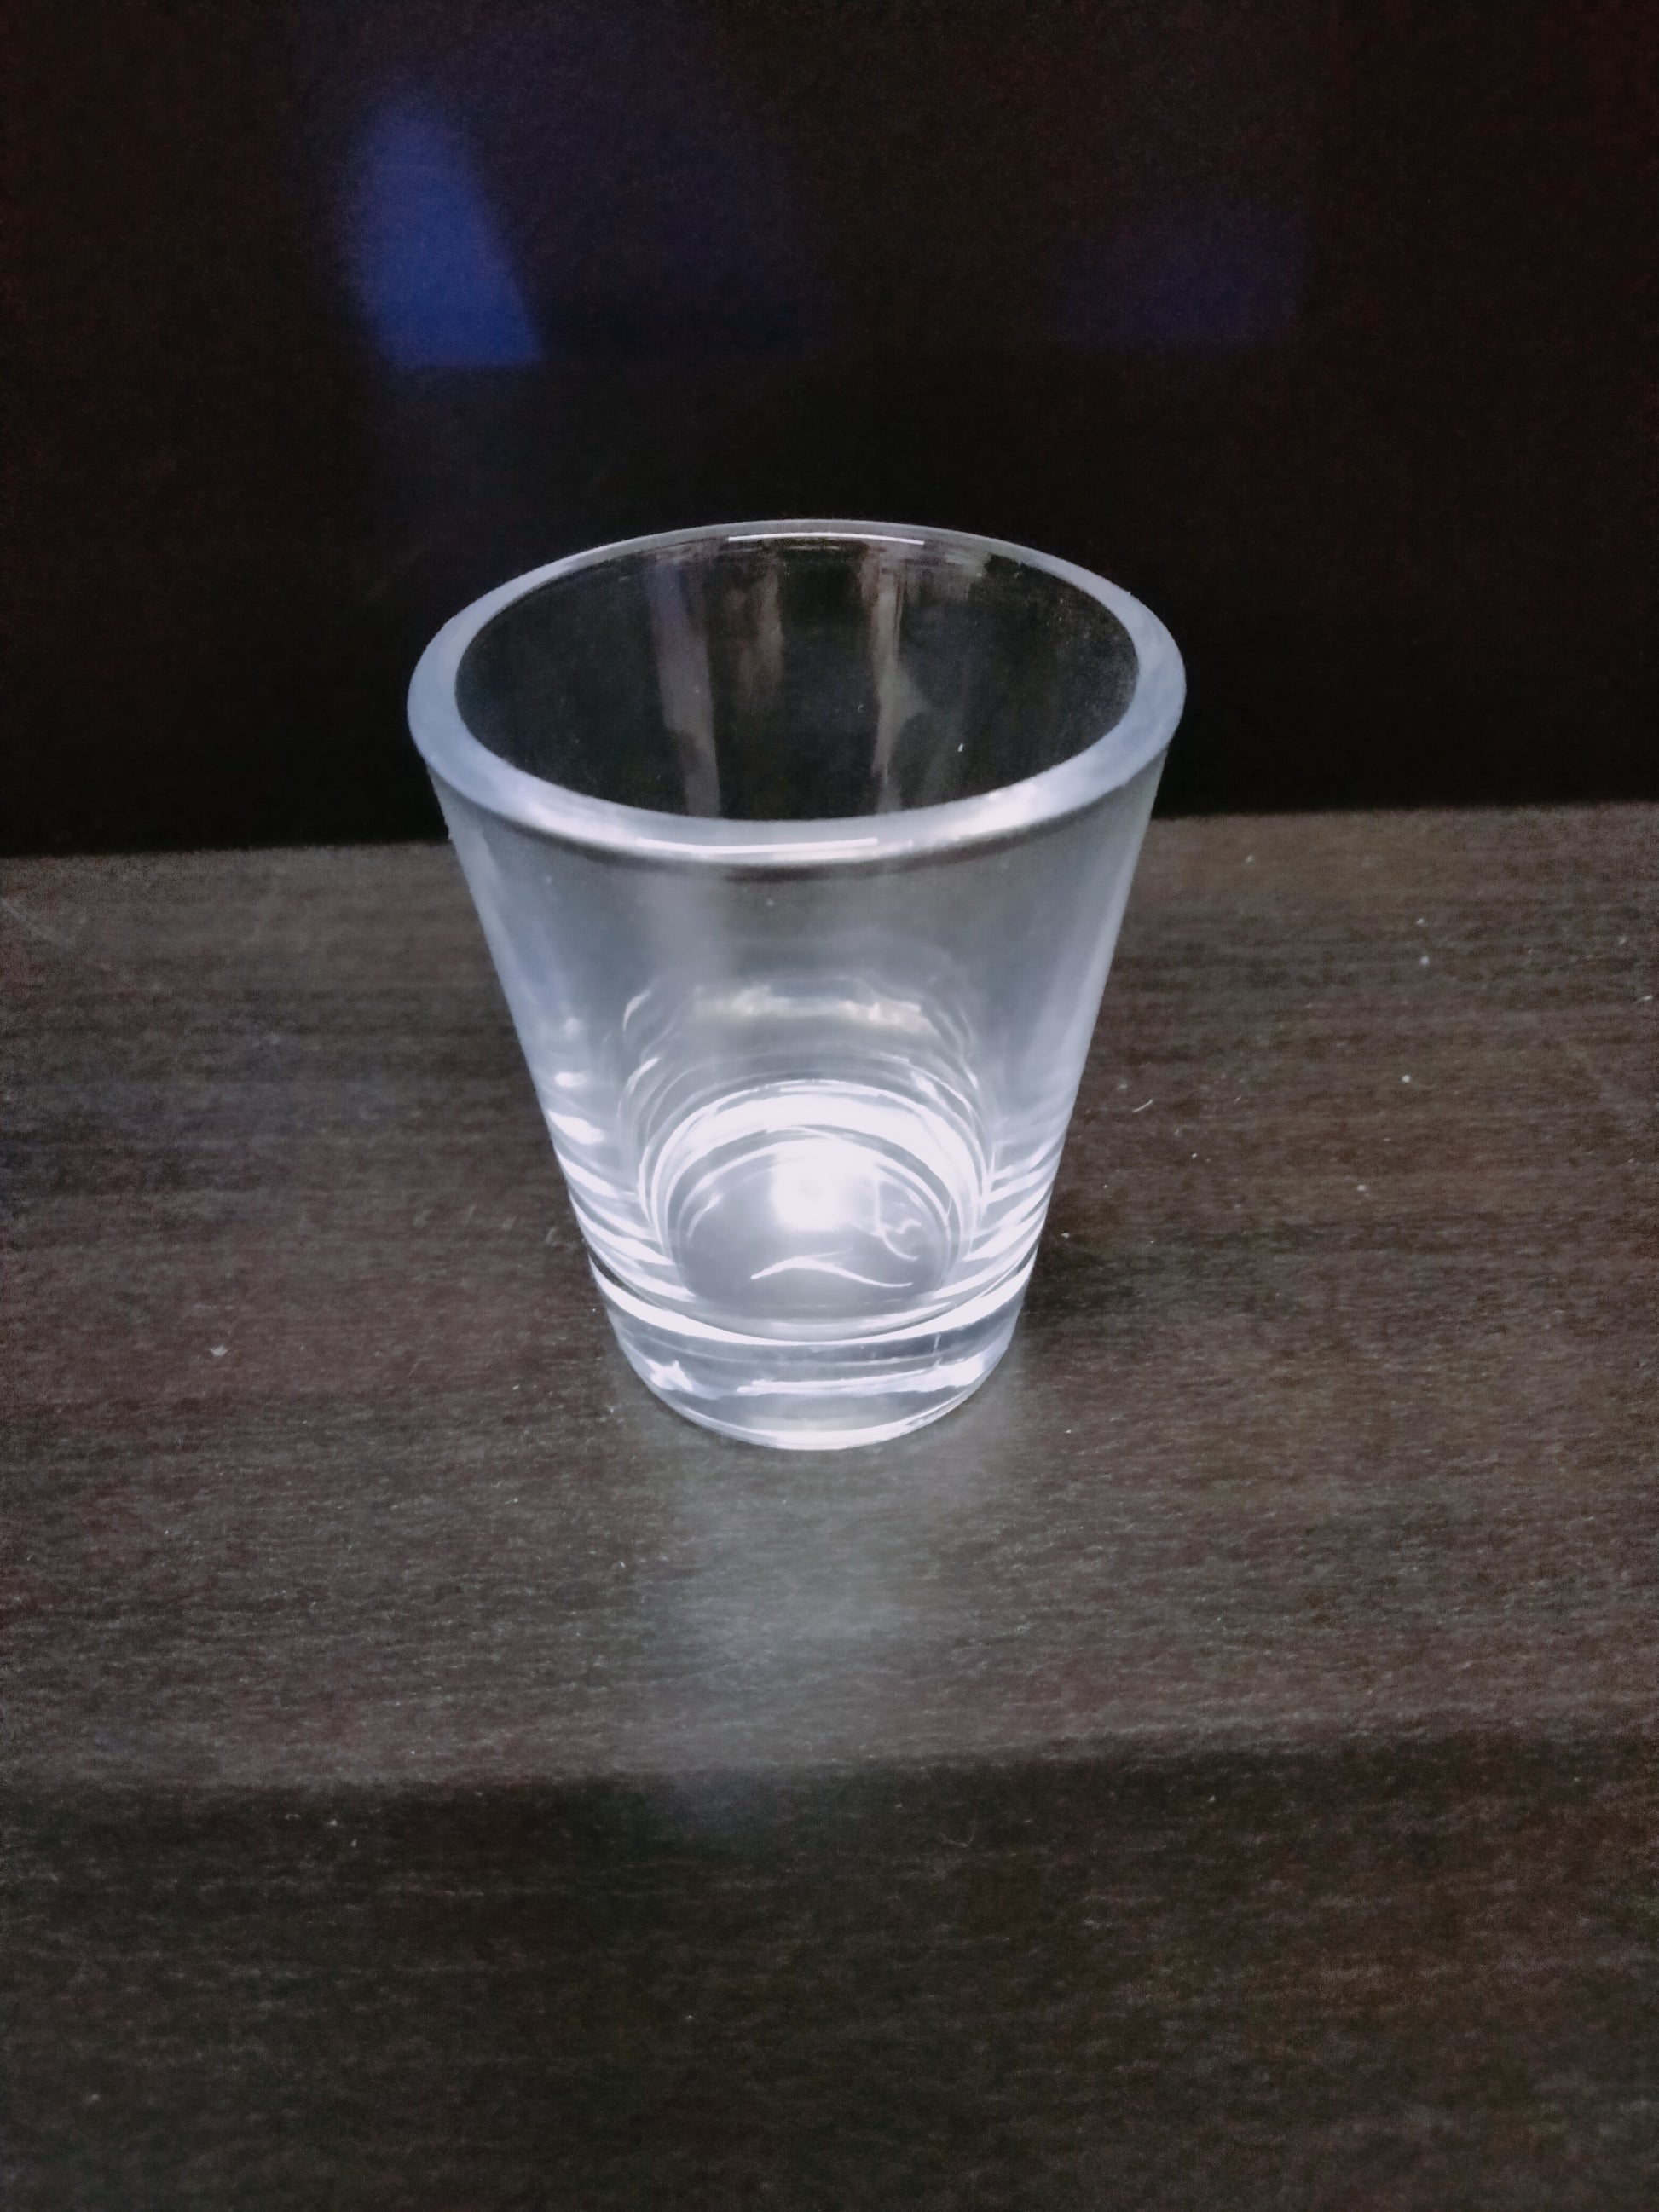 Sublimation Blank Short Shot Glass